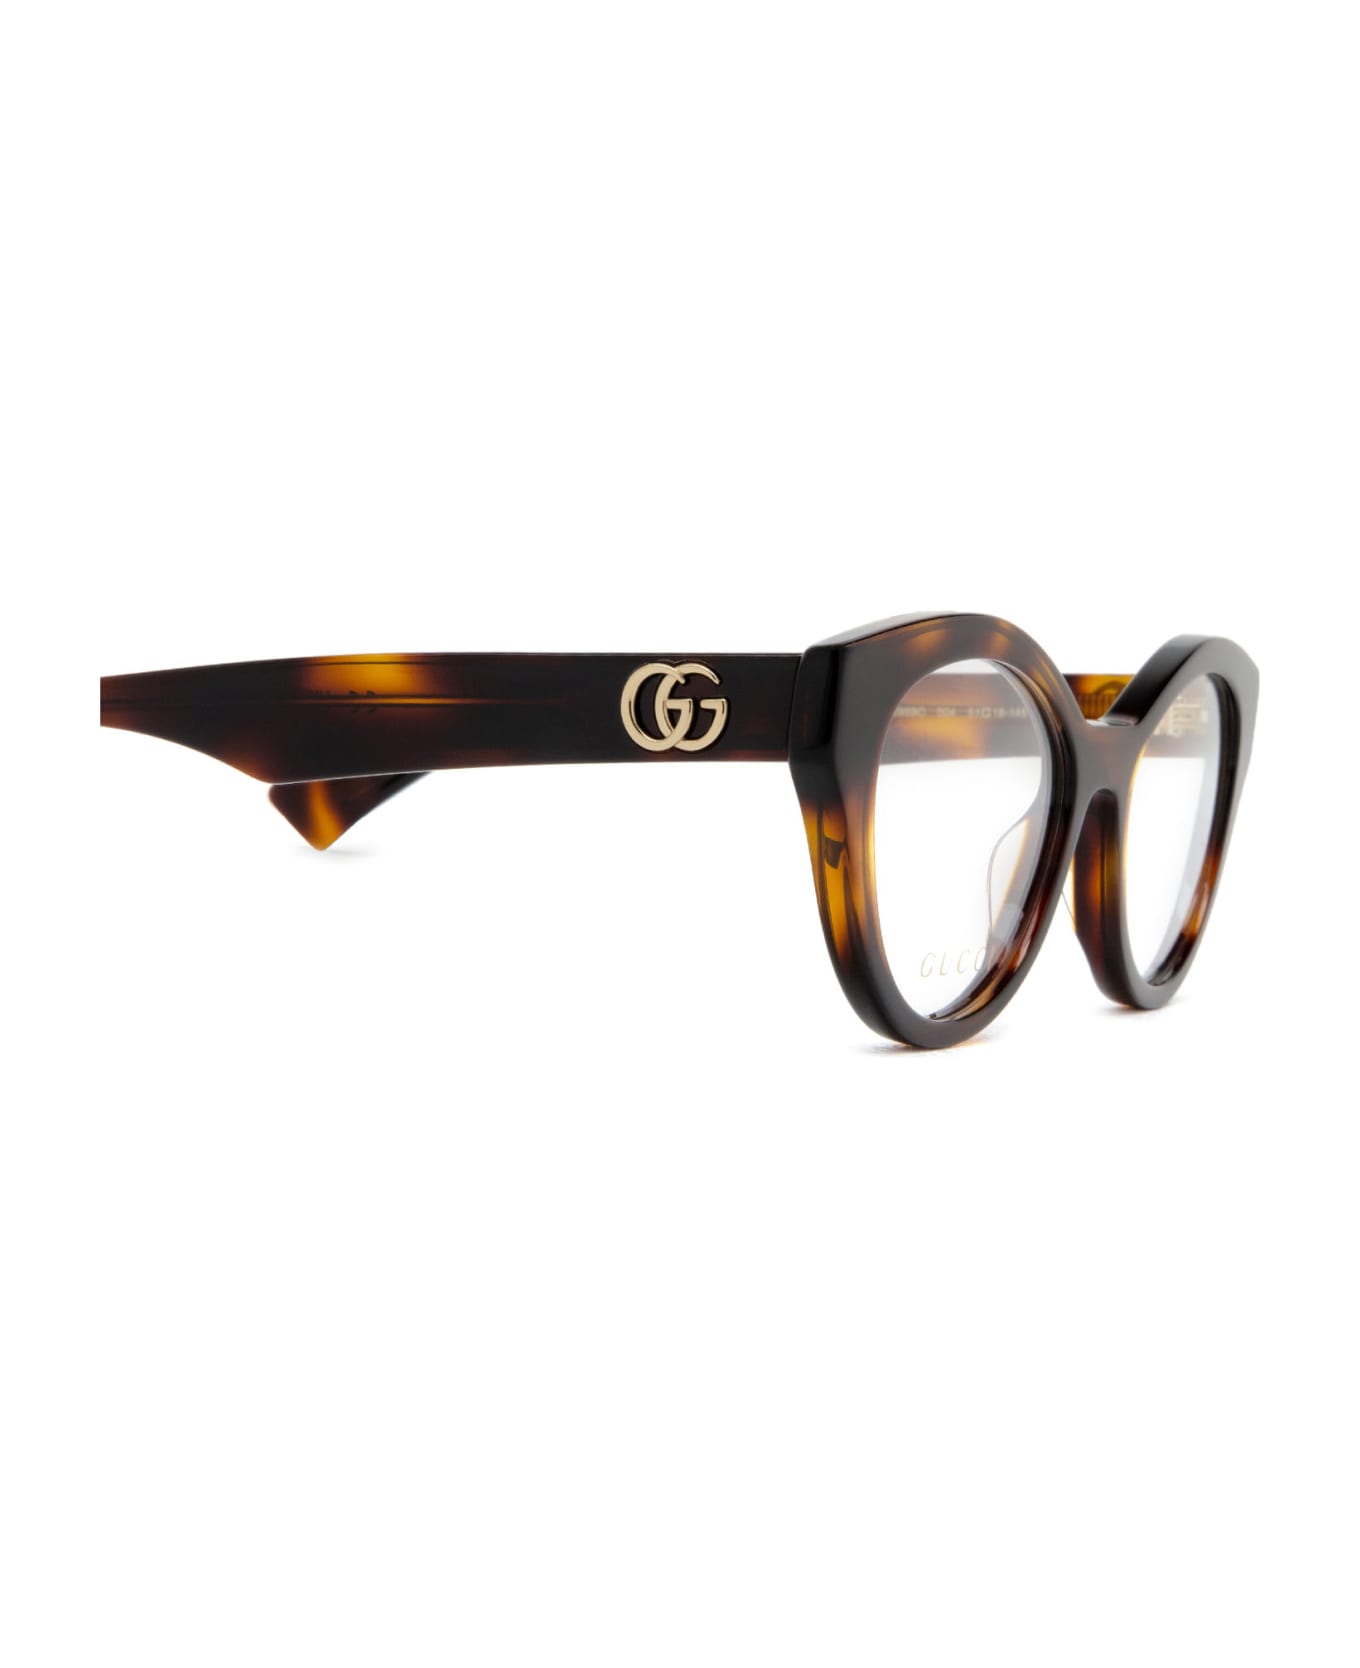 Gucci Eyewear Gg0959o Havana Glasses - Havana アイウェア